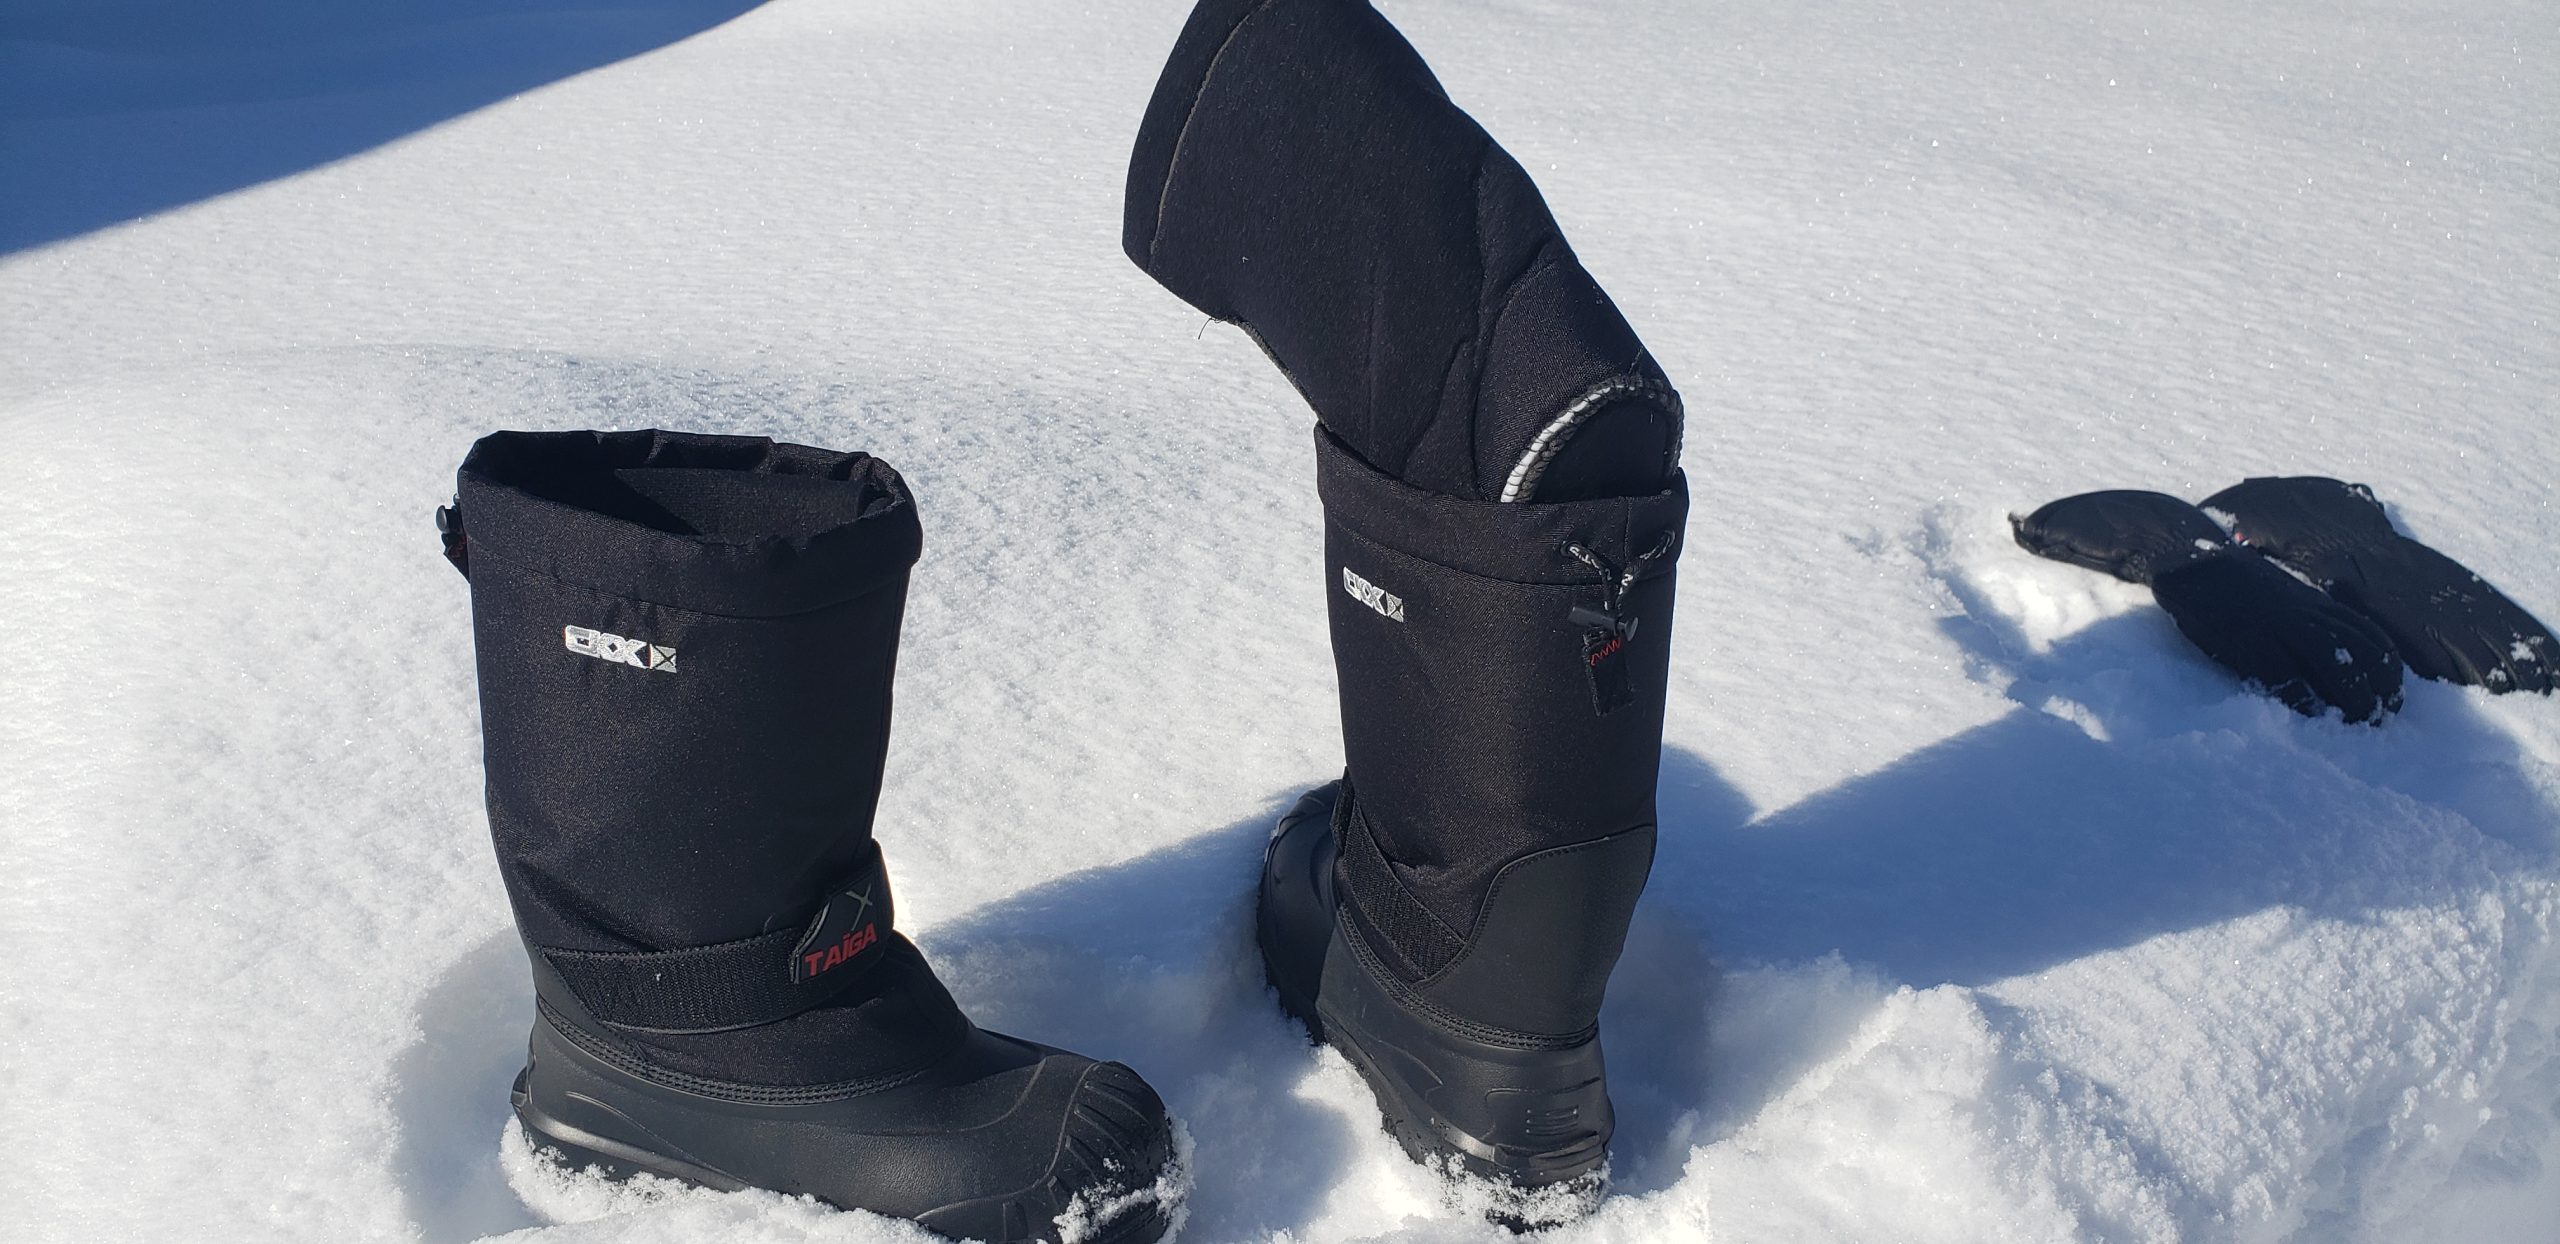 CKX Taïga EVO boots and CKX Confort Grip gloves review - SledMagazine.com